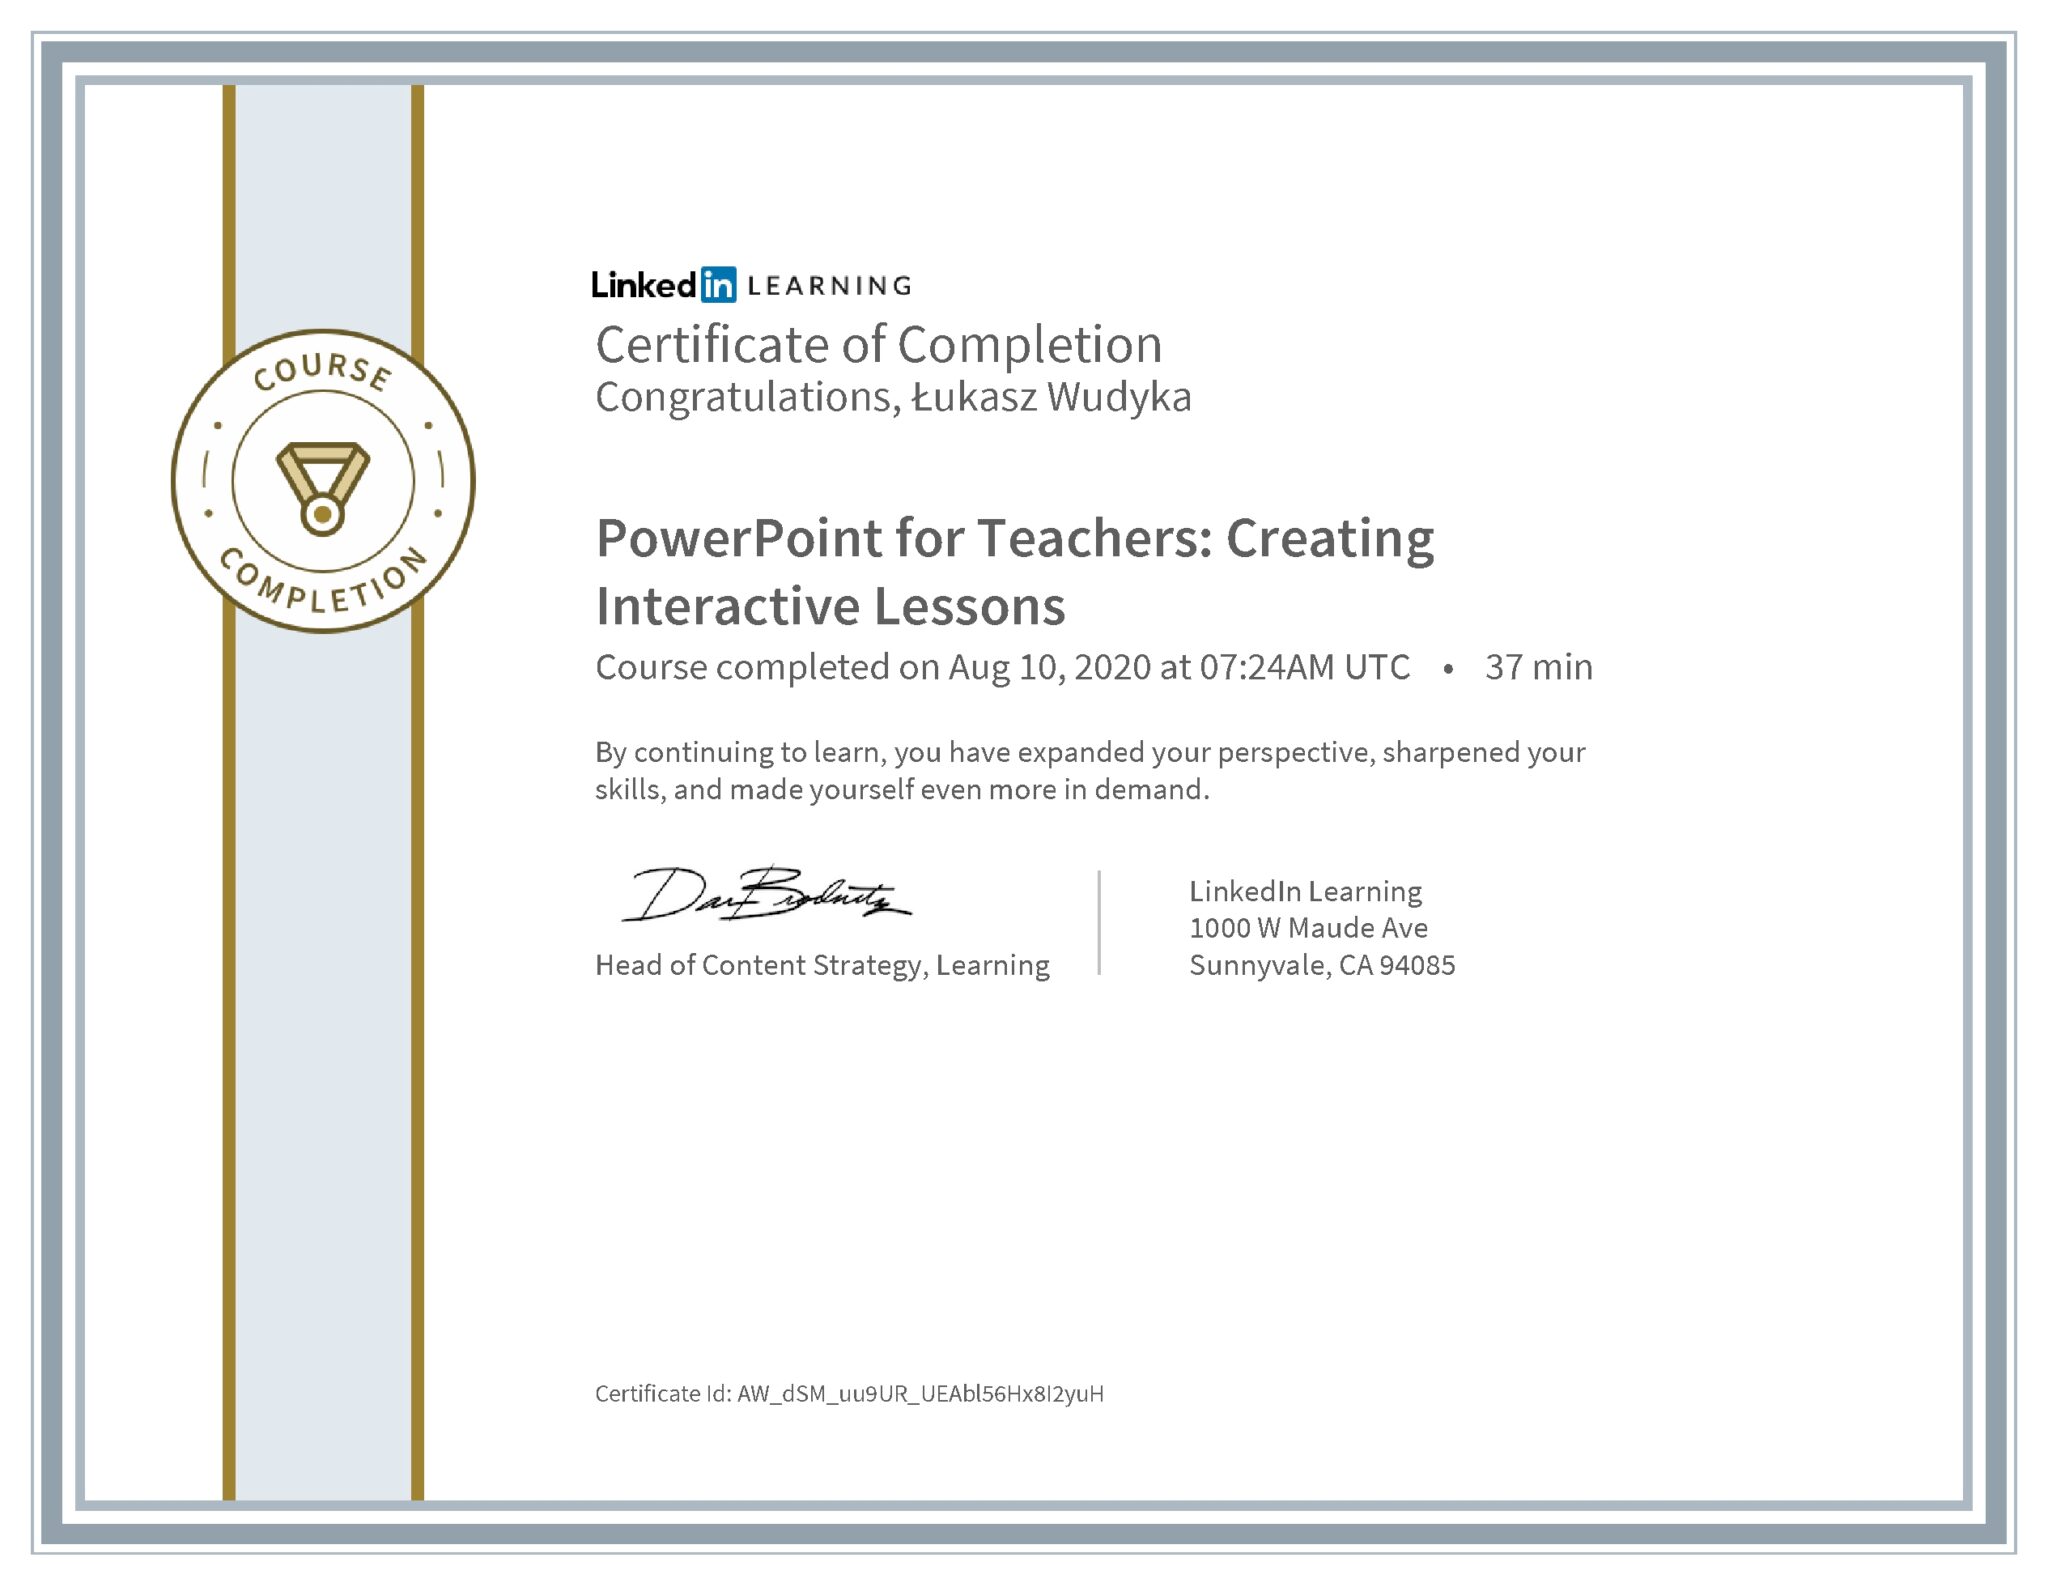 Łukasz Wudyka certyfikat LinkedIn PowerPoint for Teachers: Creating Interactive Lessons